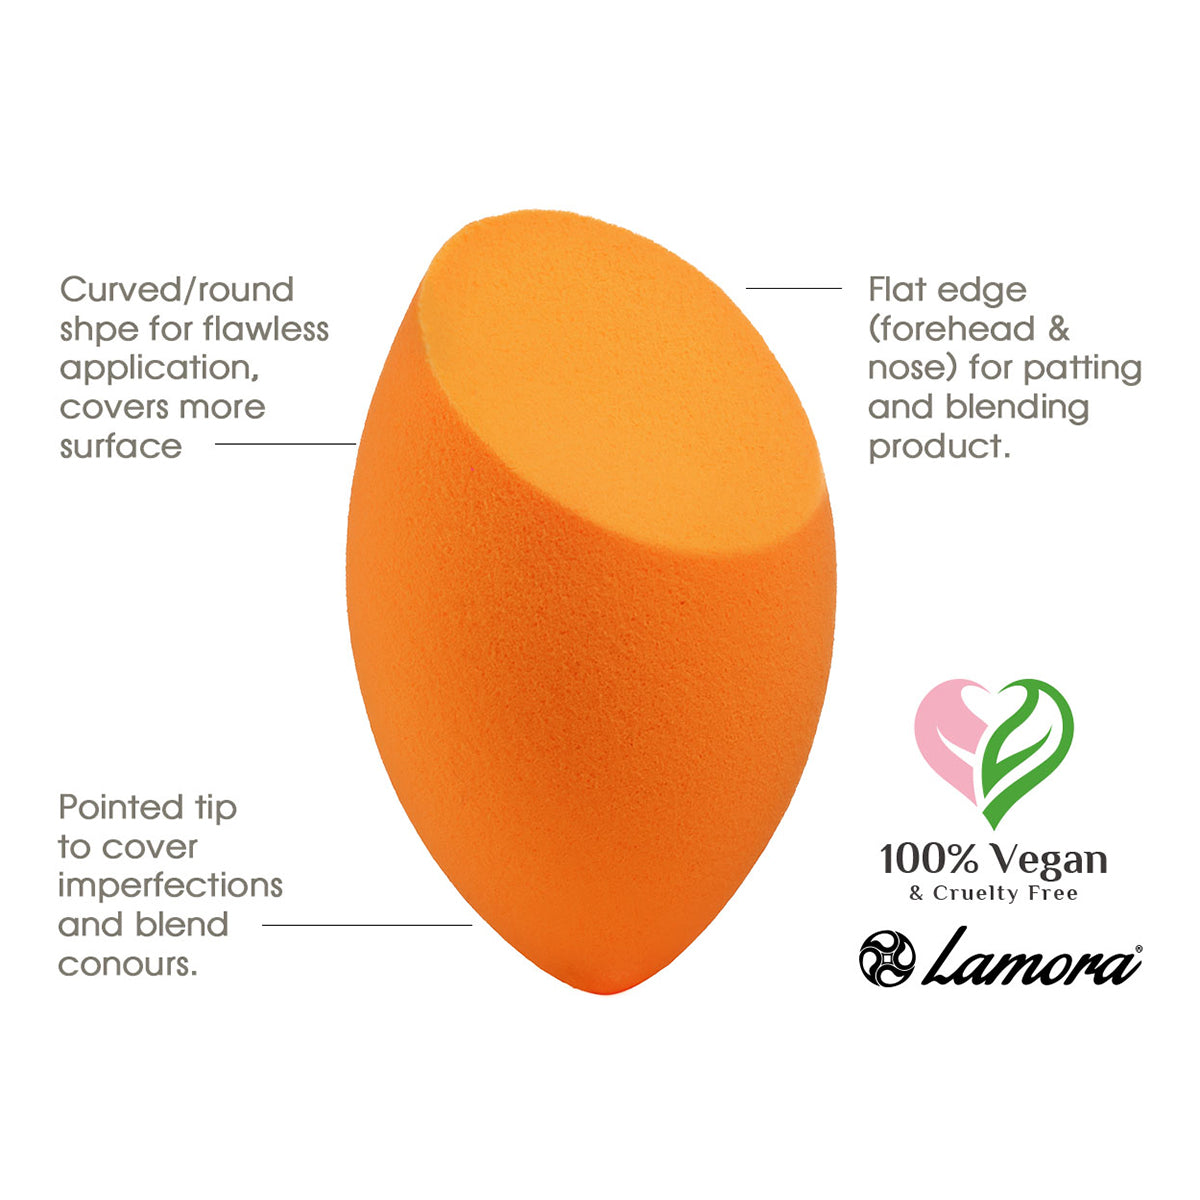 What makes a good makeup blending sponge from Lamora Beauty